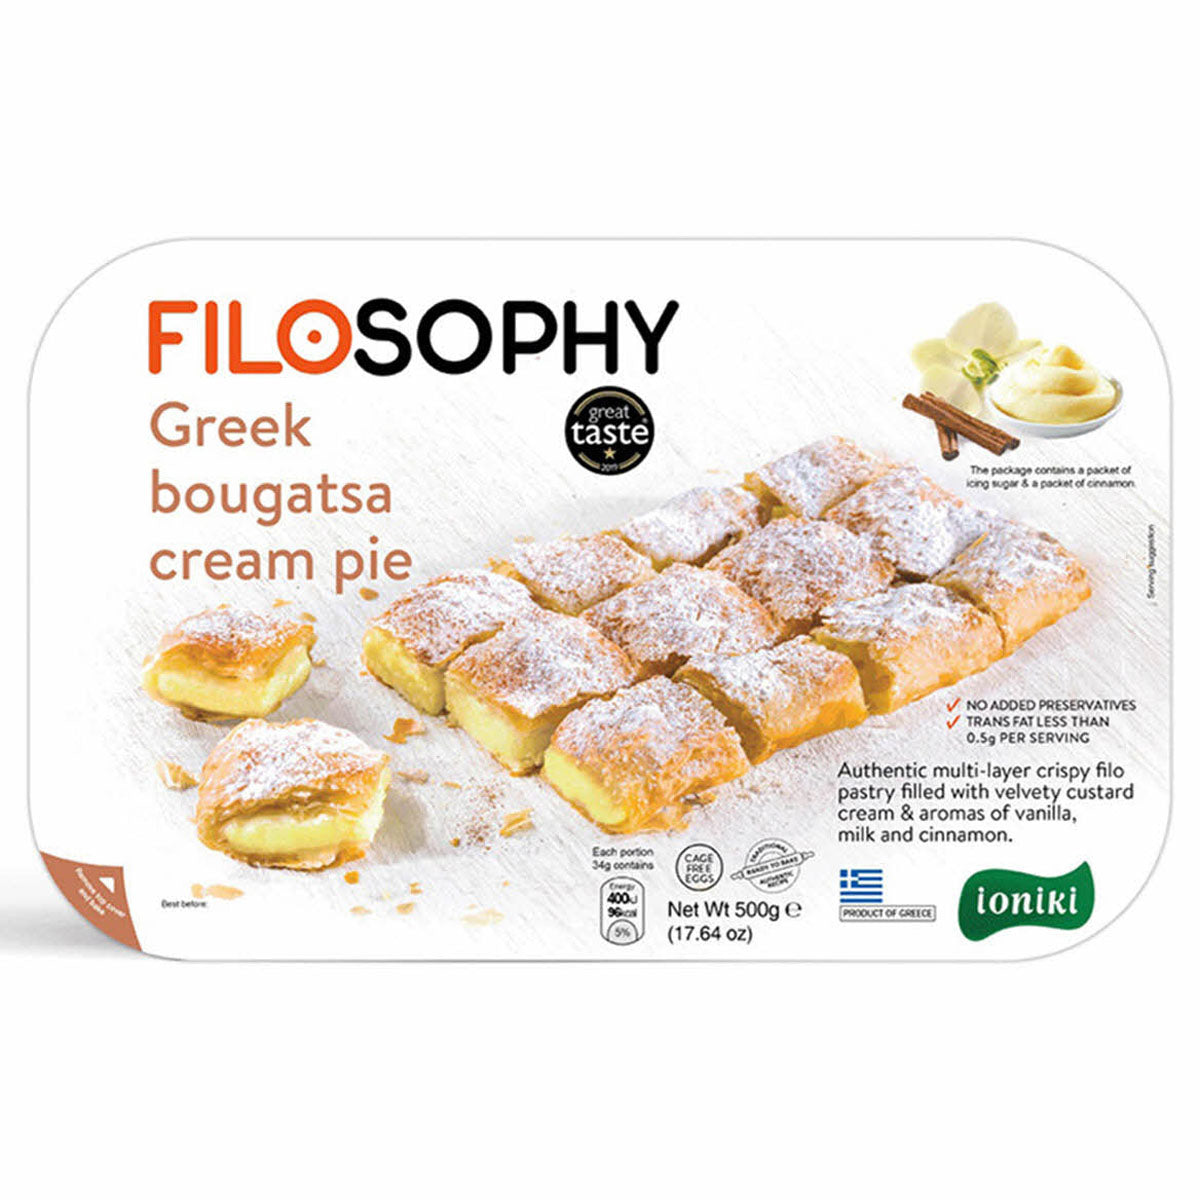 Filosophy - Cream Pie Bougasta - 500g - Continental Food Store